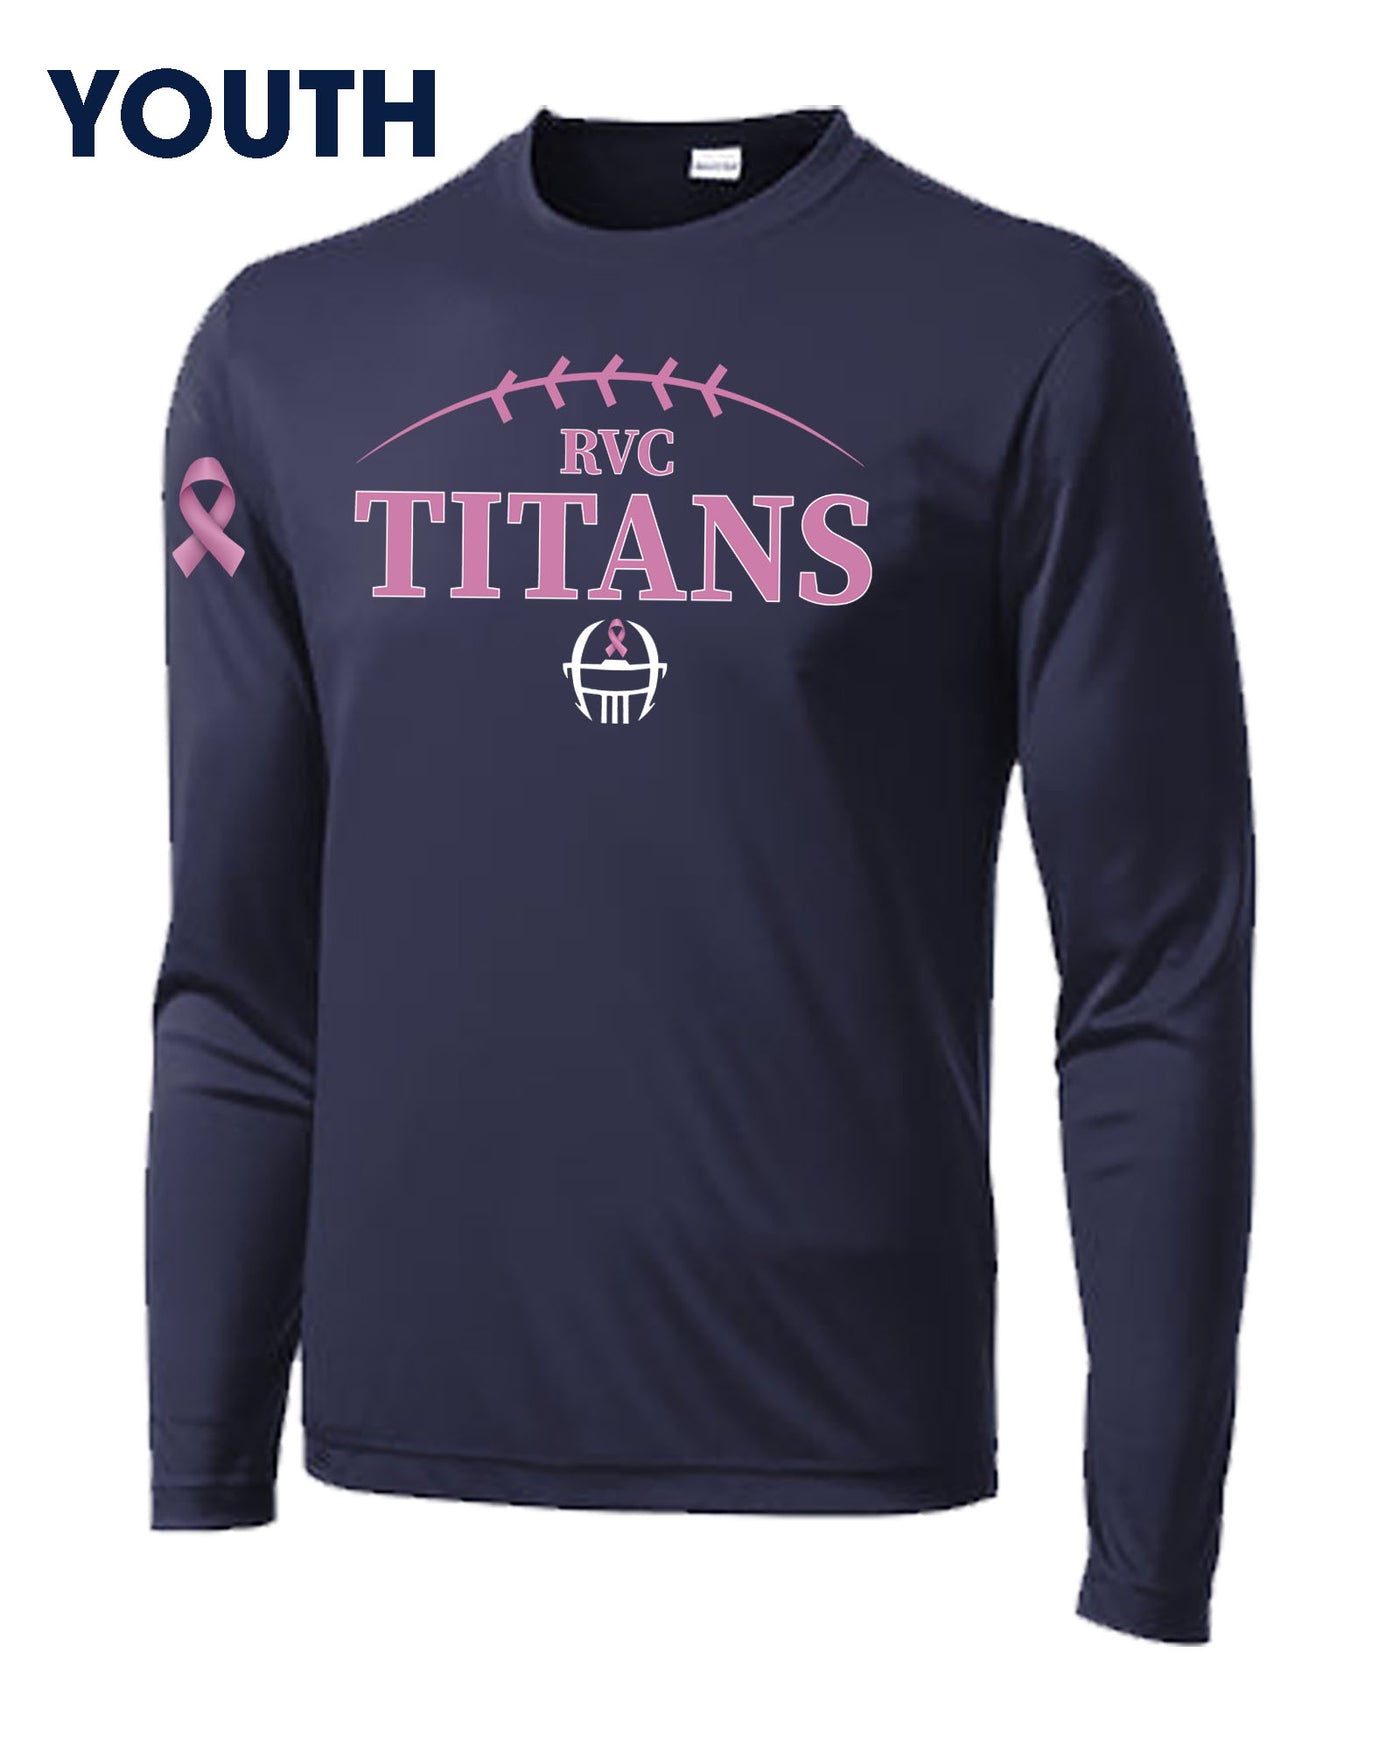 YOUTH Titans Awareness Long Sleeve T Shirt